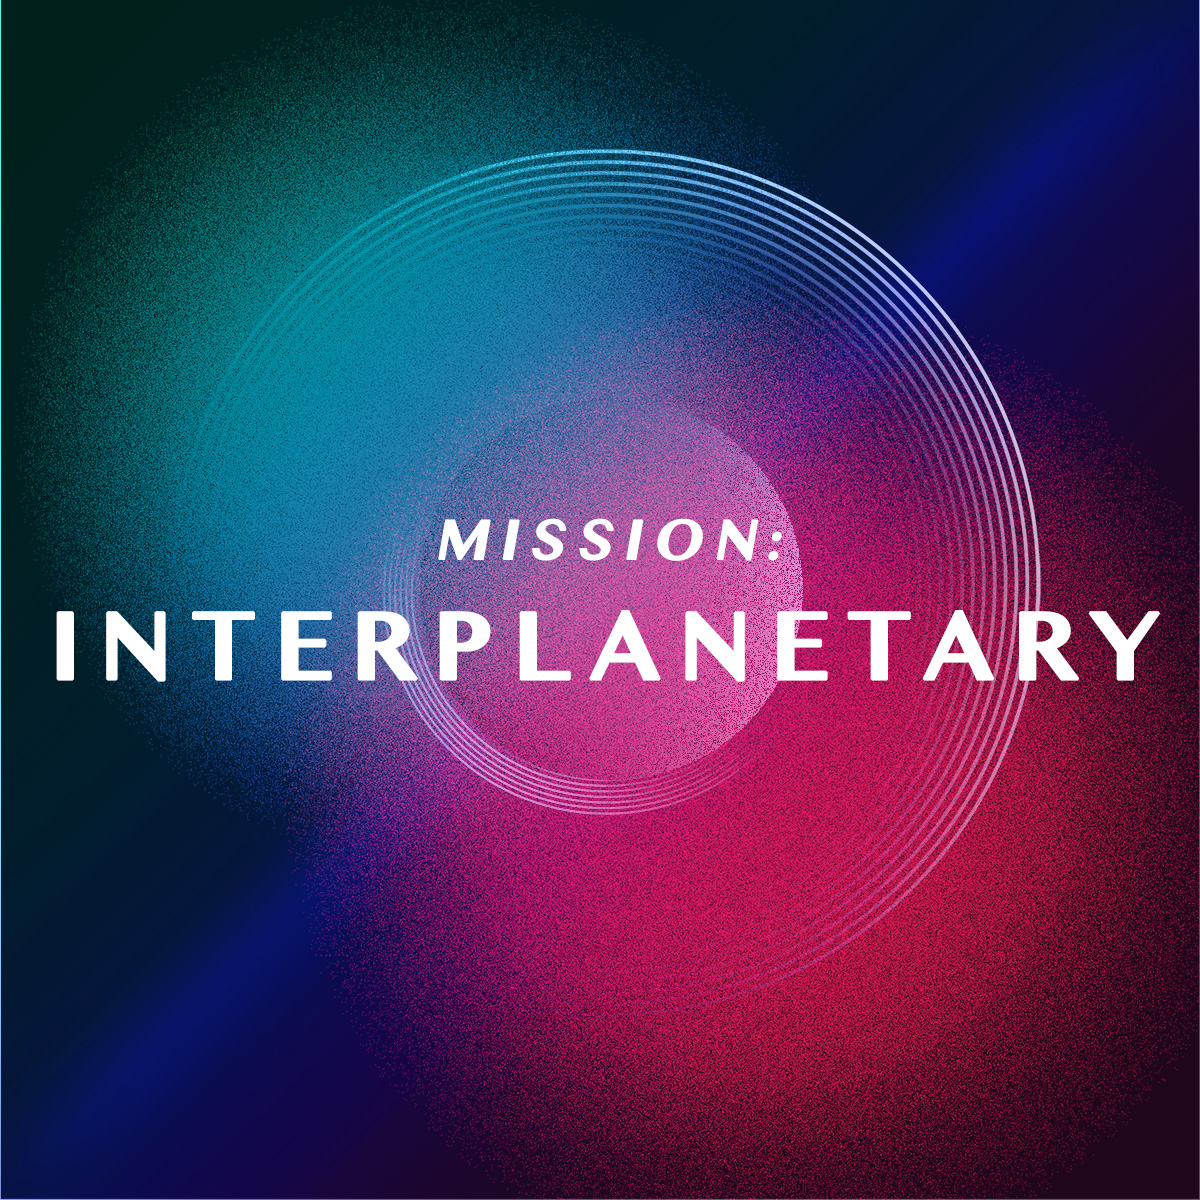 Mission Interplanetary podcast logo